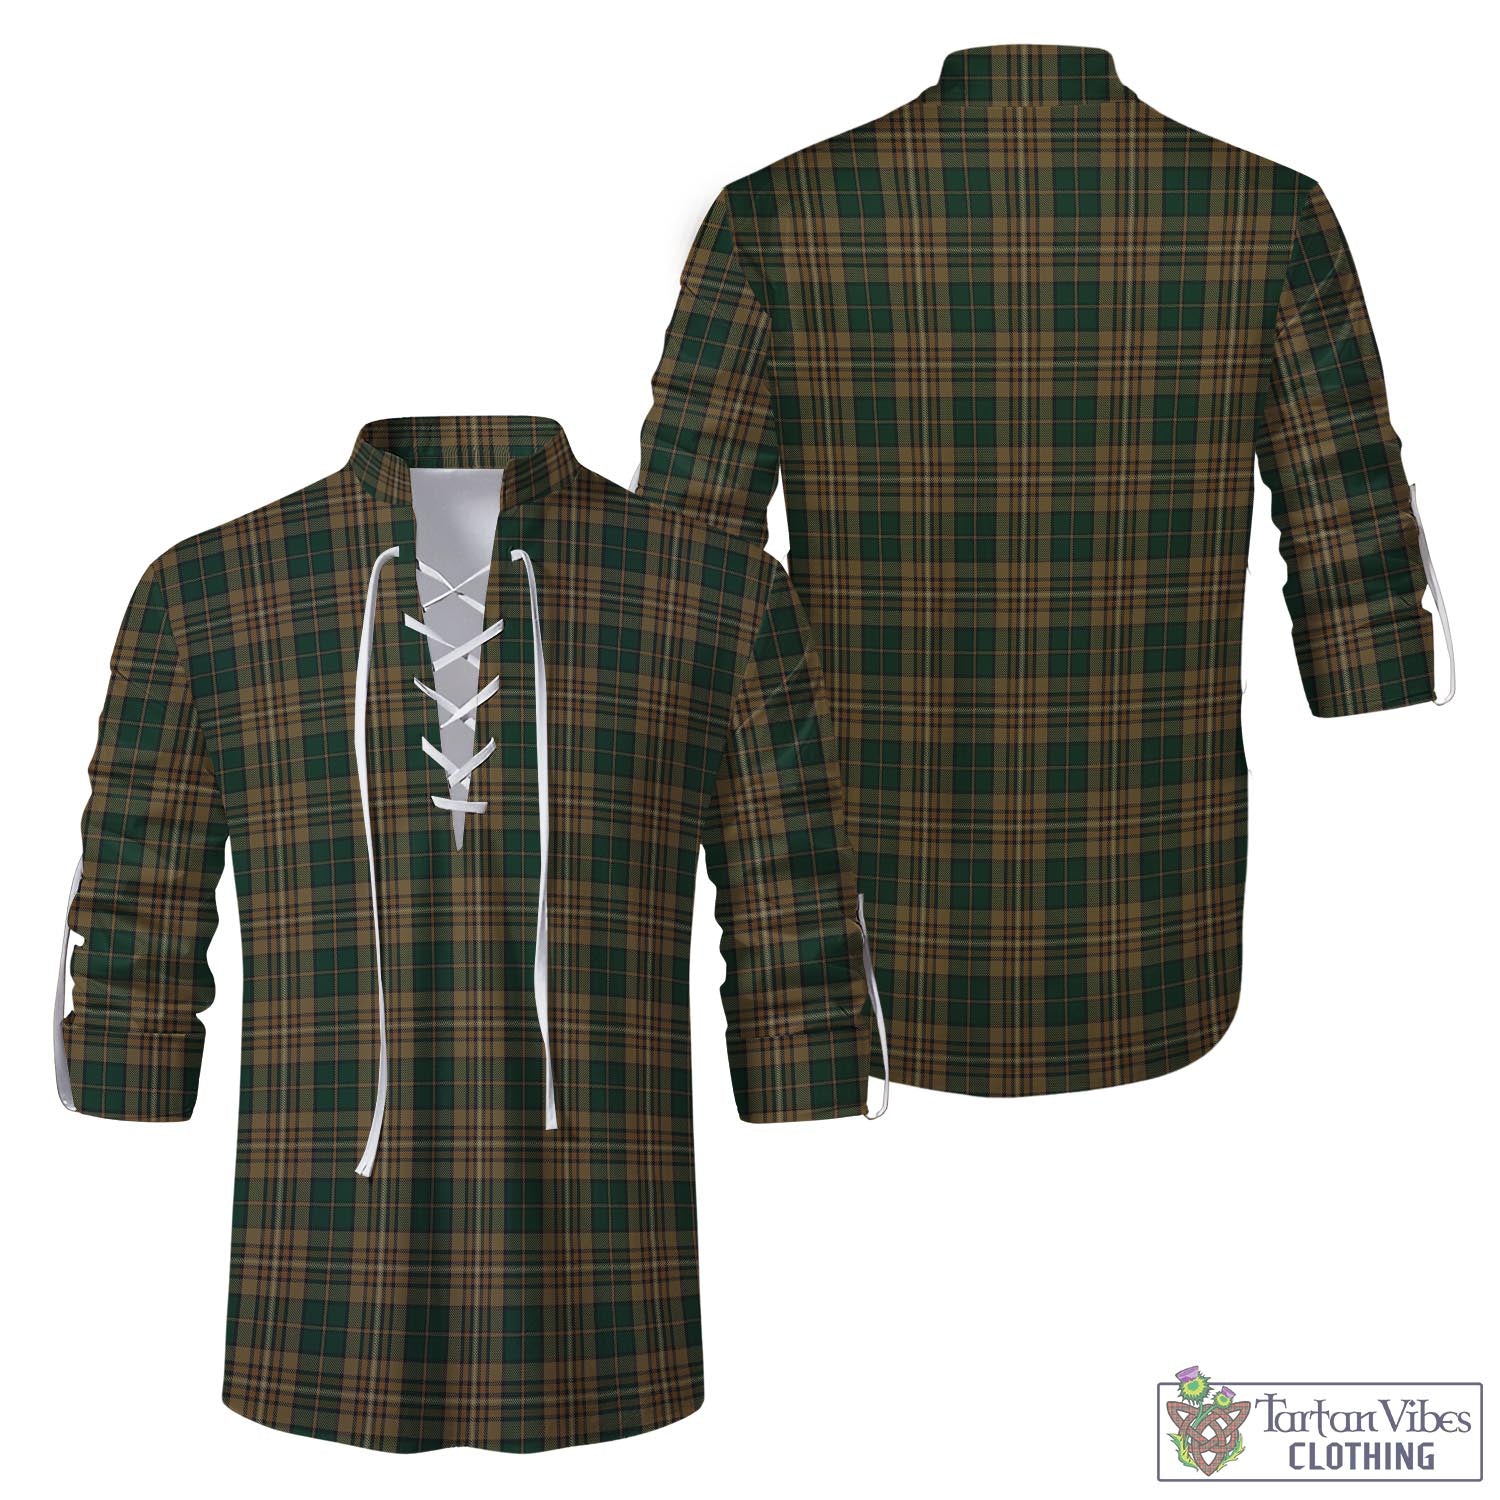 Tartan Vibes Clothing Fitzsimmons Tartan Men's Scottish Traditional Jacobite Ghillie Kilt Shirt